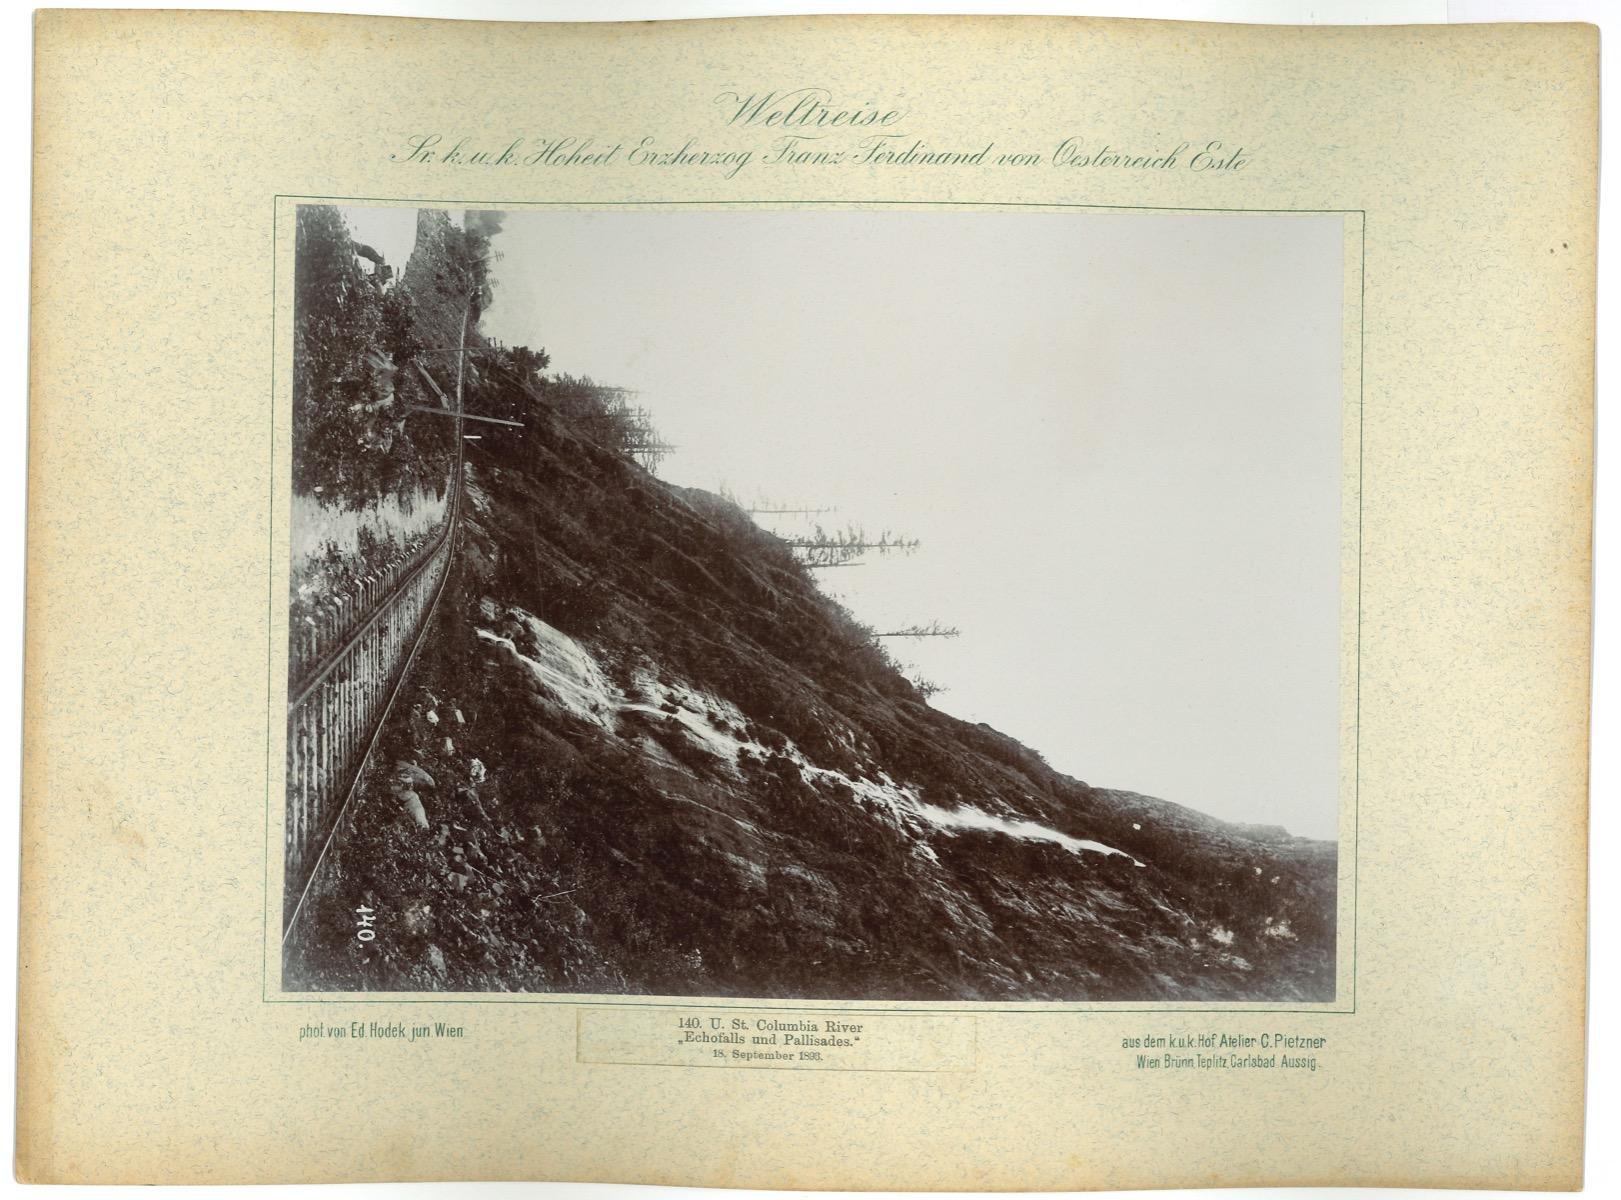 Unknown Landscape Photograph - U.St. Columbia River - Echofalls and Pallisades - Vintage Photo - 1893